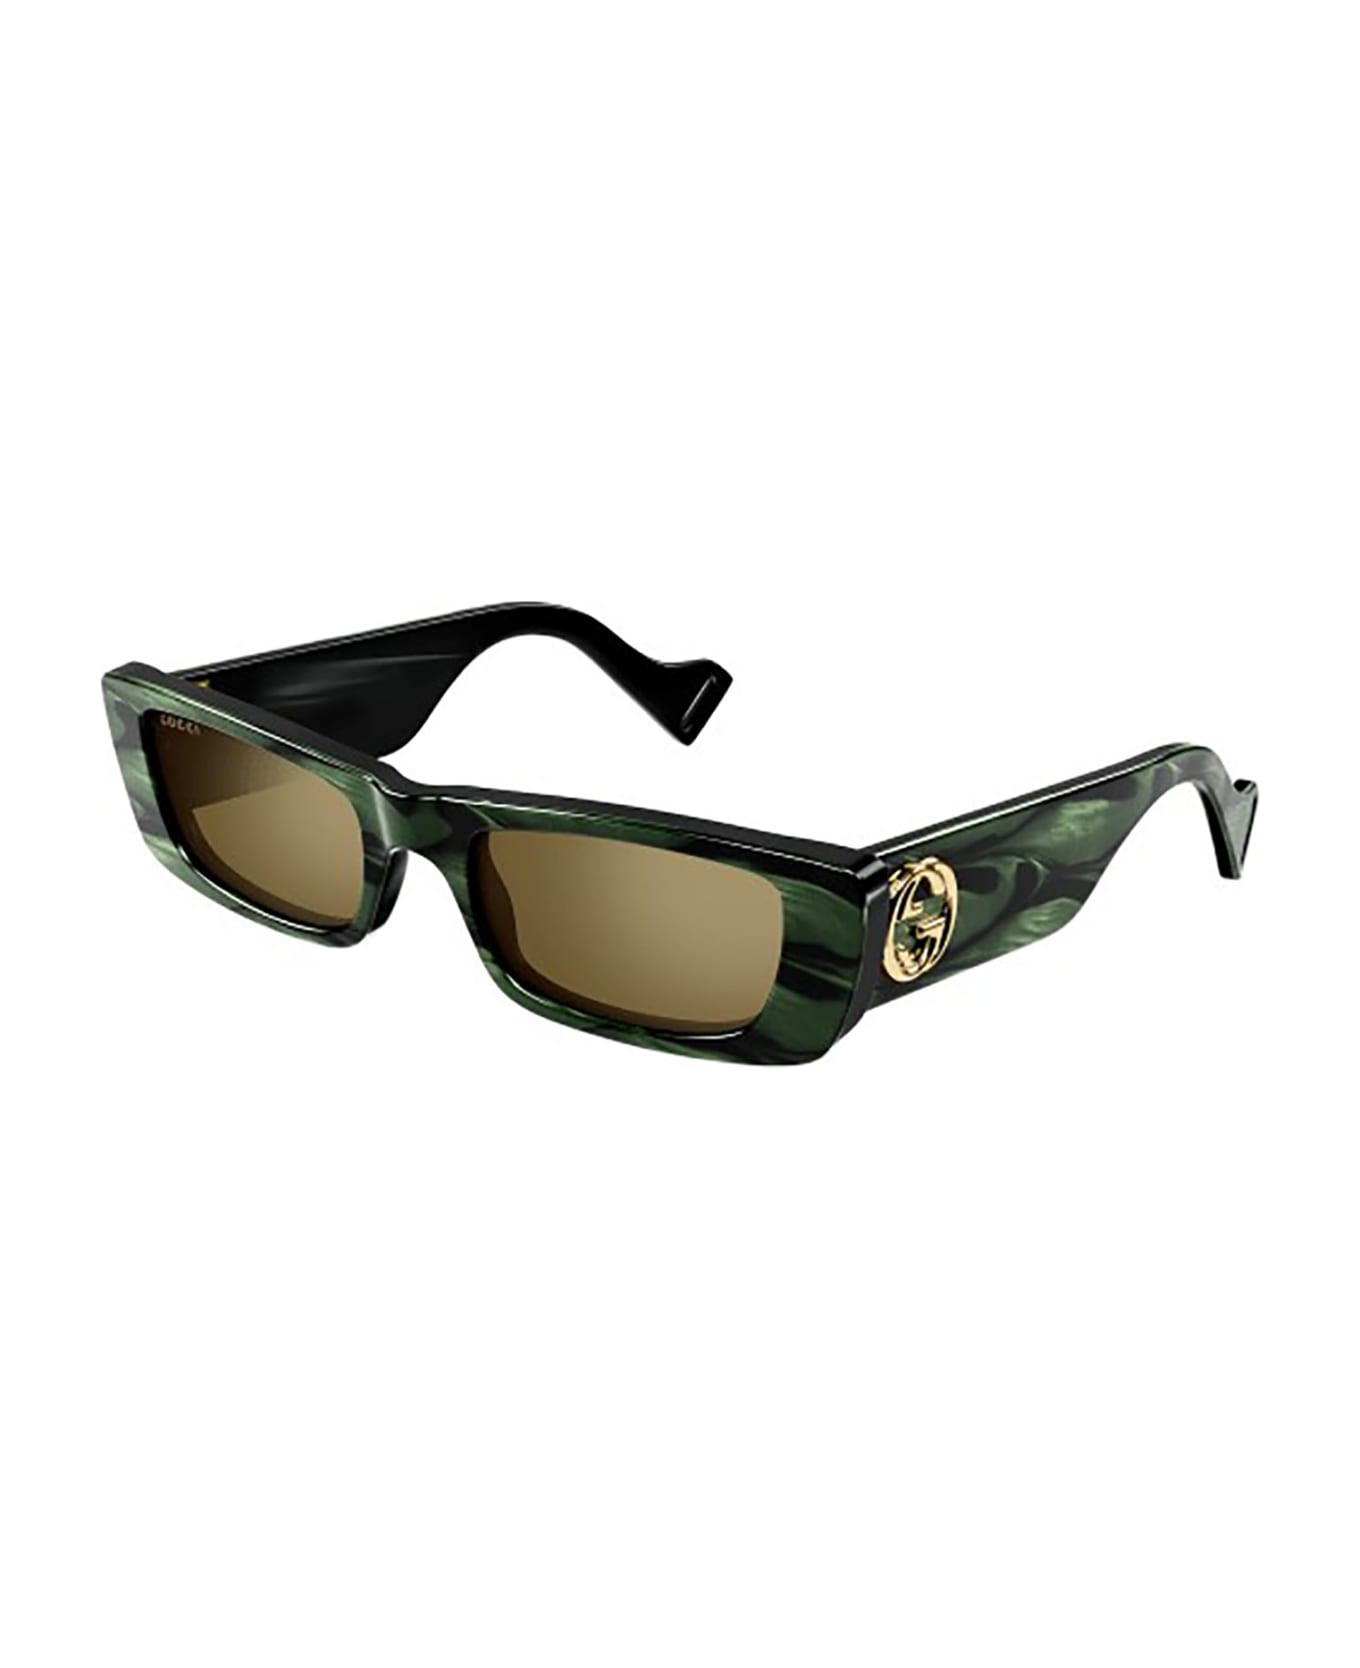 Gucci Eyewear GG0516S Sunglasses - Green Green Bronze